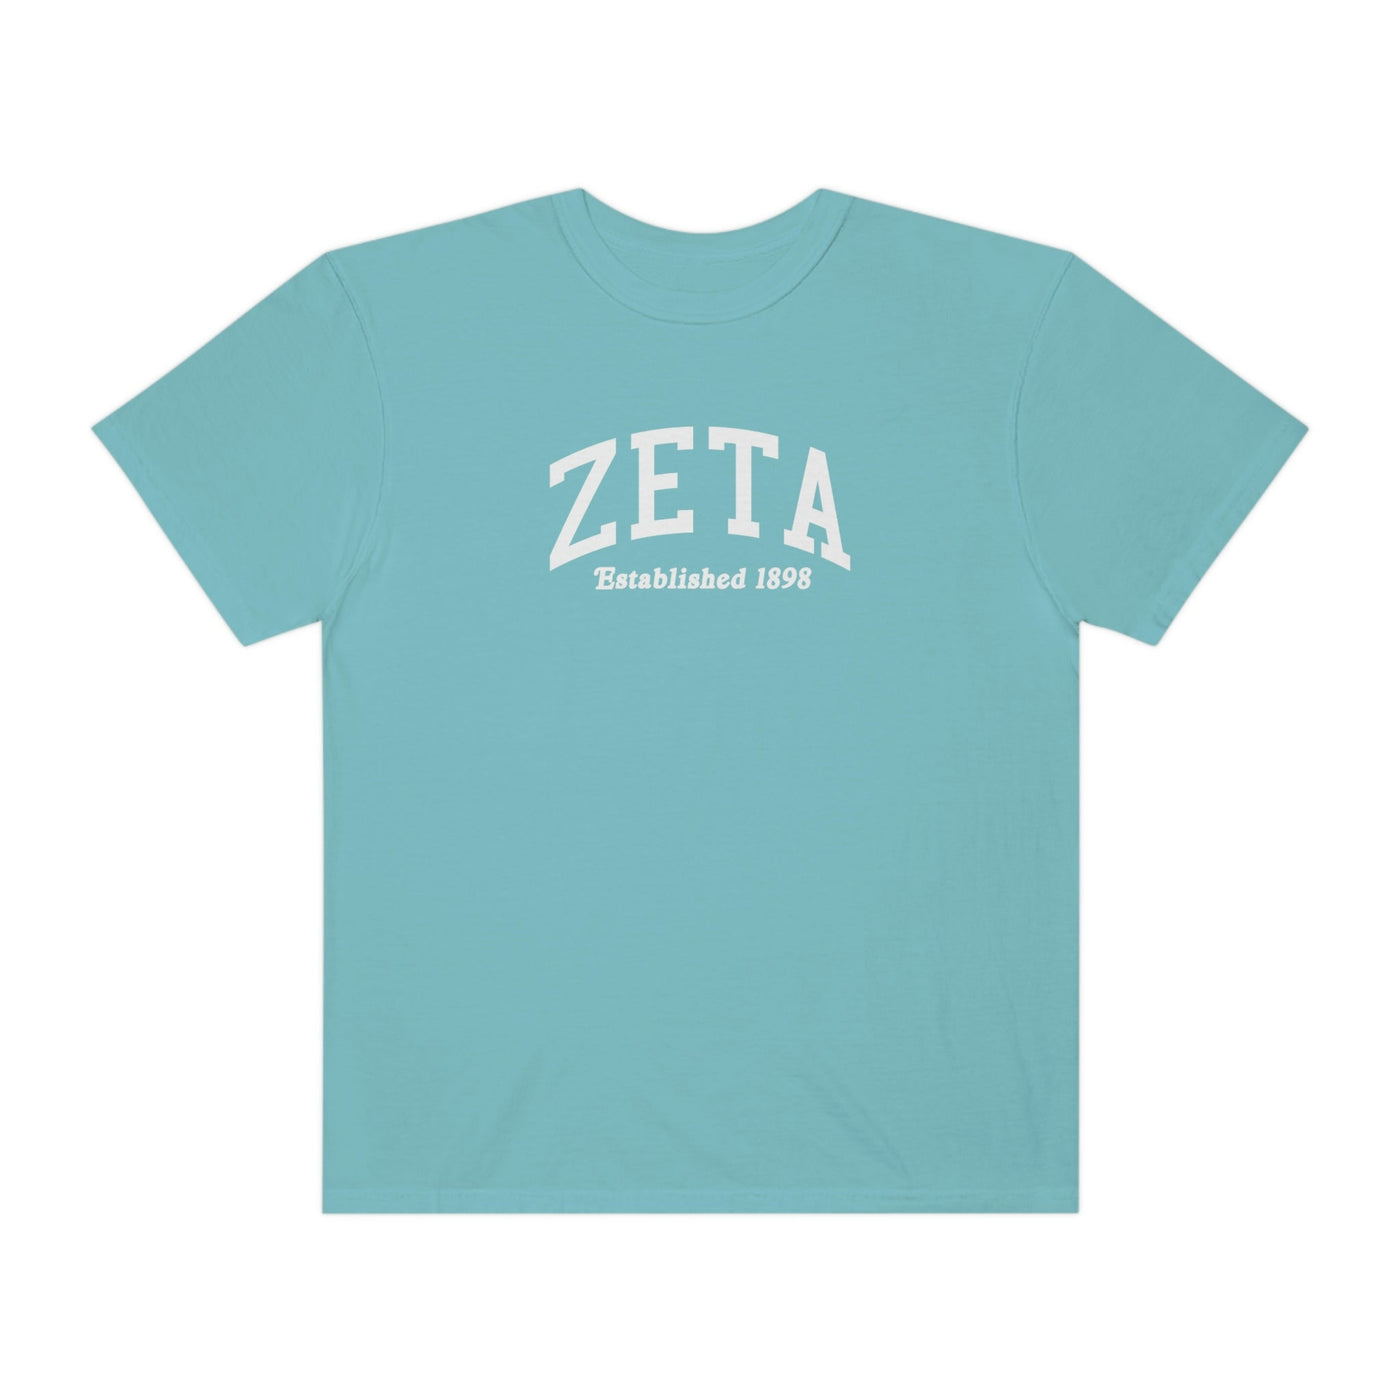 Zeta Tau Alpha Varsity College Sorority Comfy T-Shirt